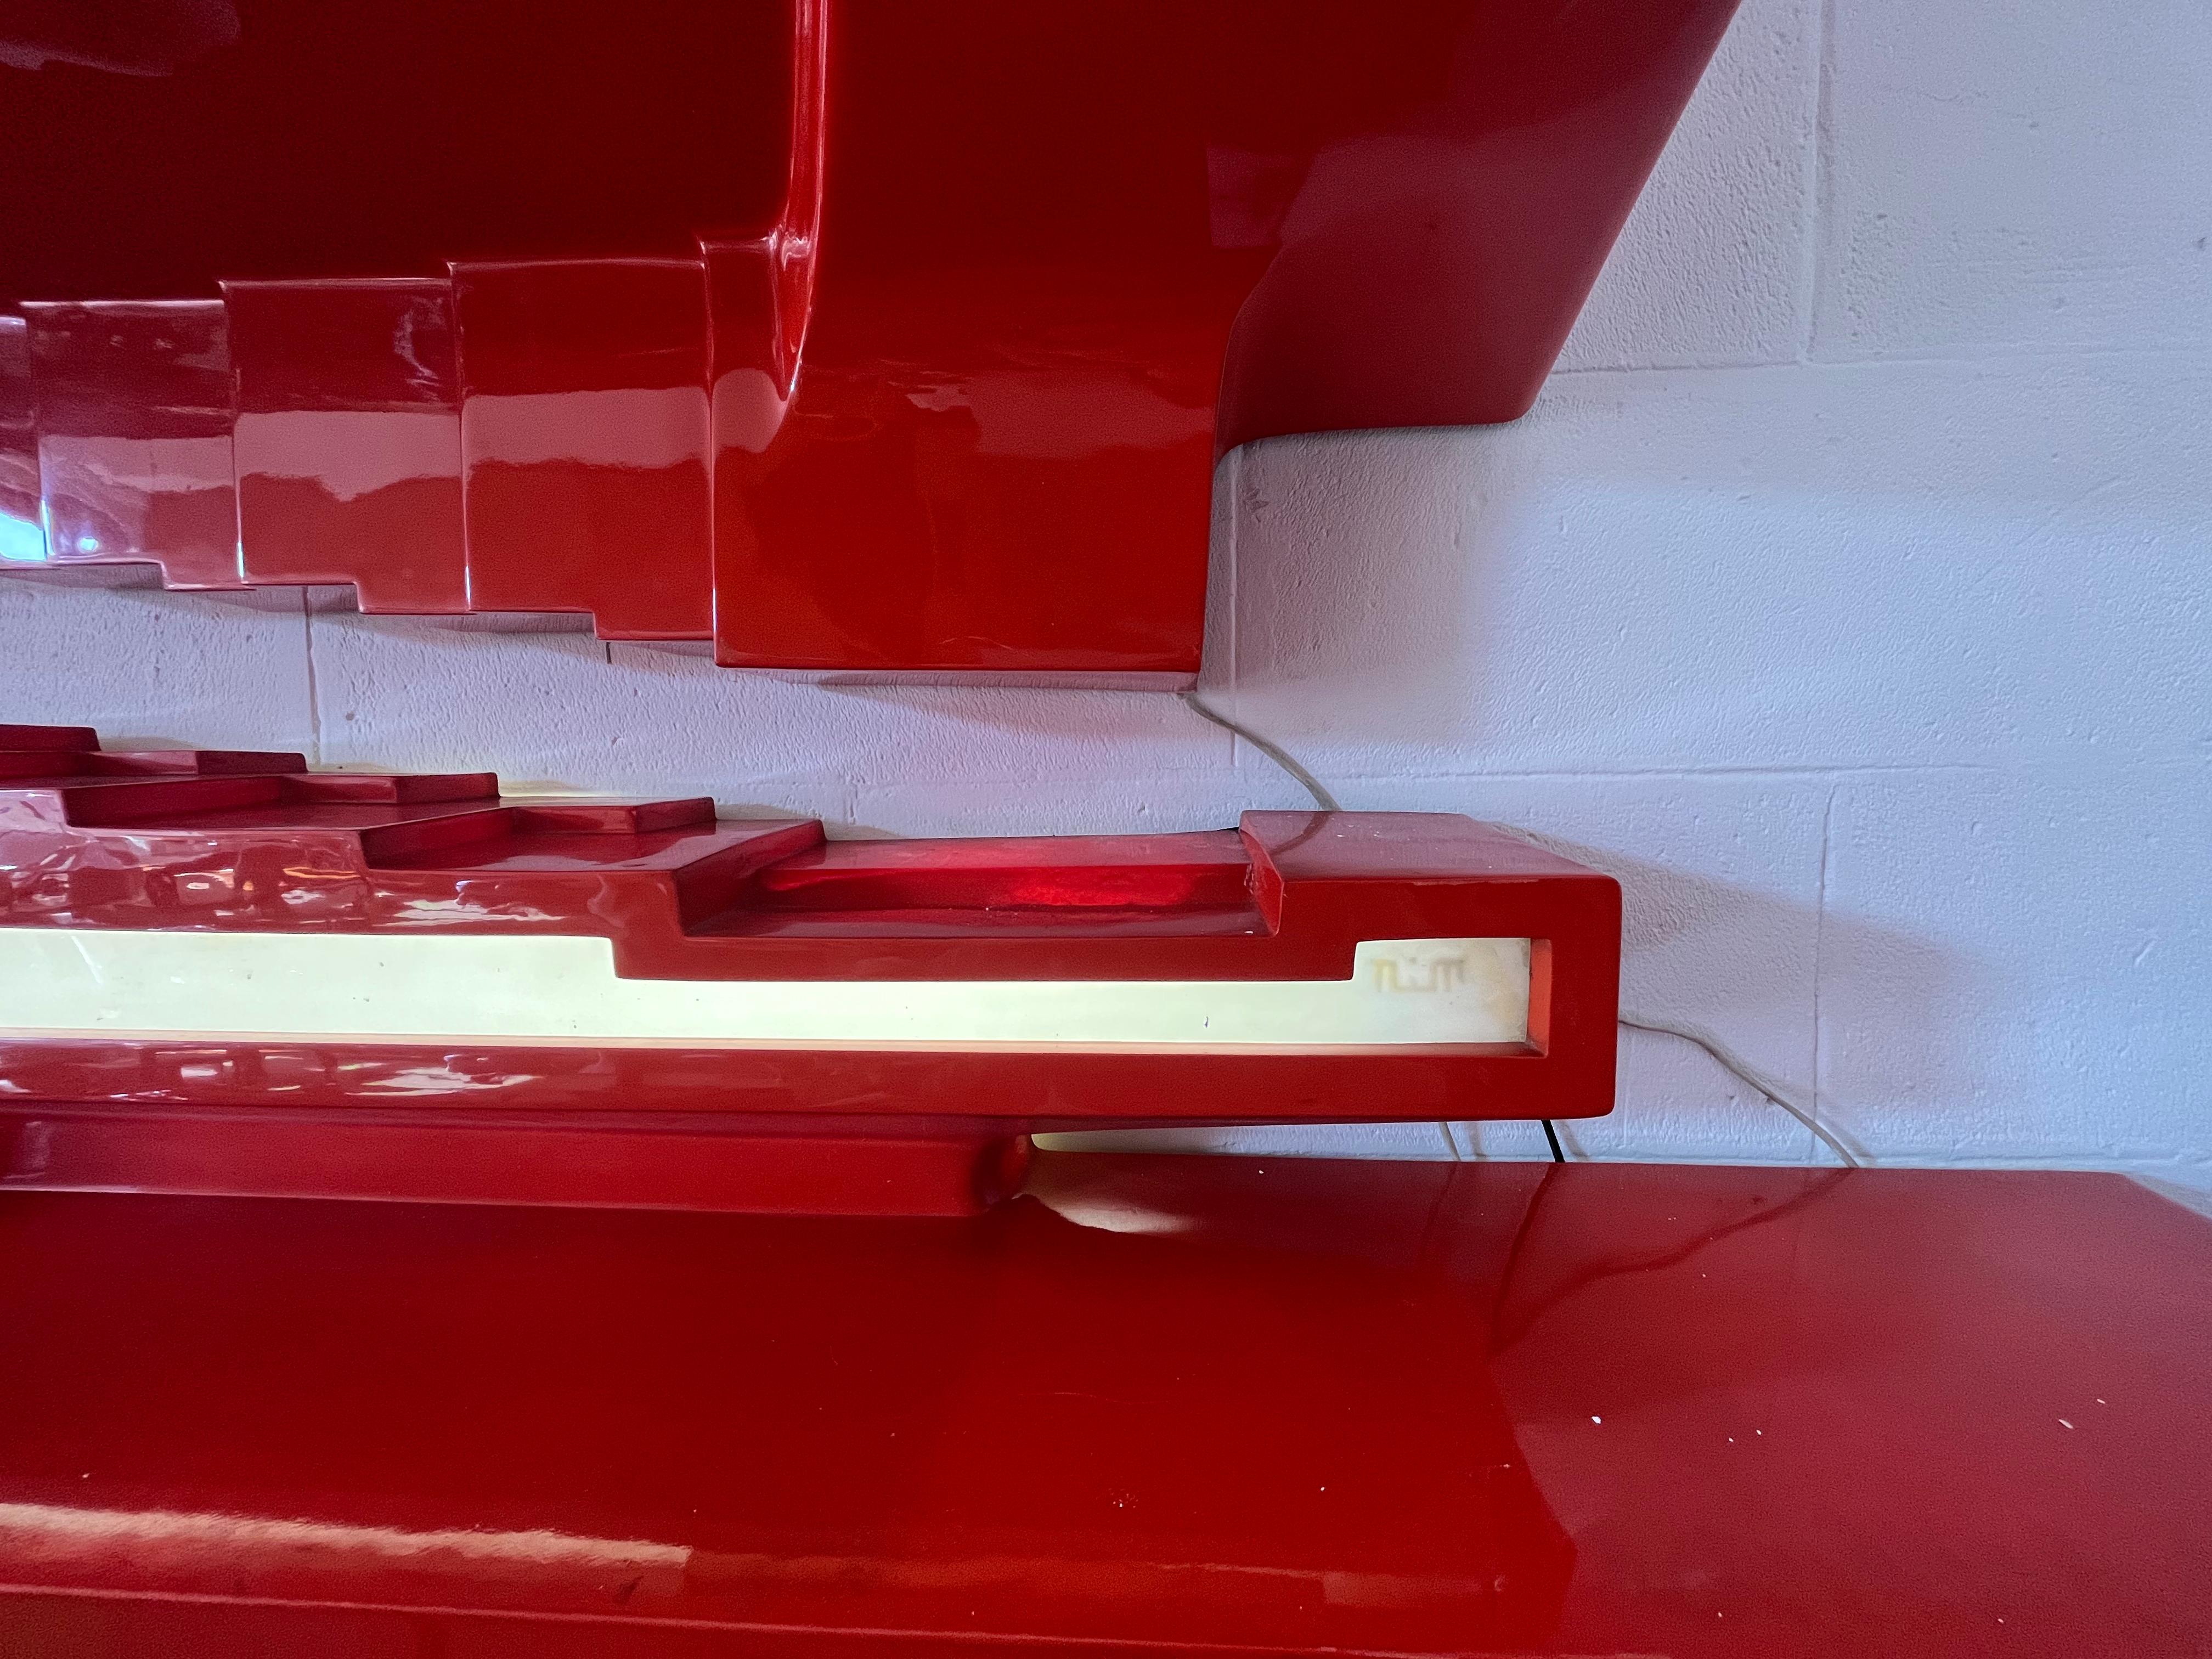 Italian Red Fiberglass Library from Mim Roma - space age style design by Luigi Pellegrin